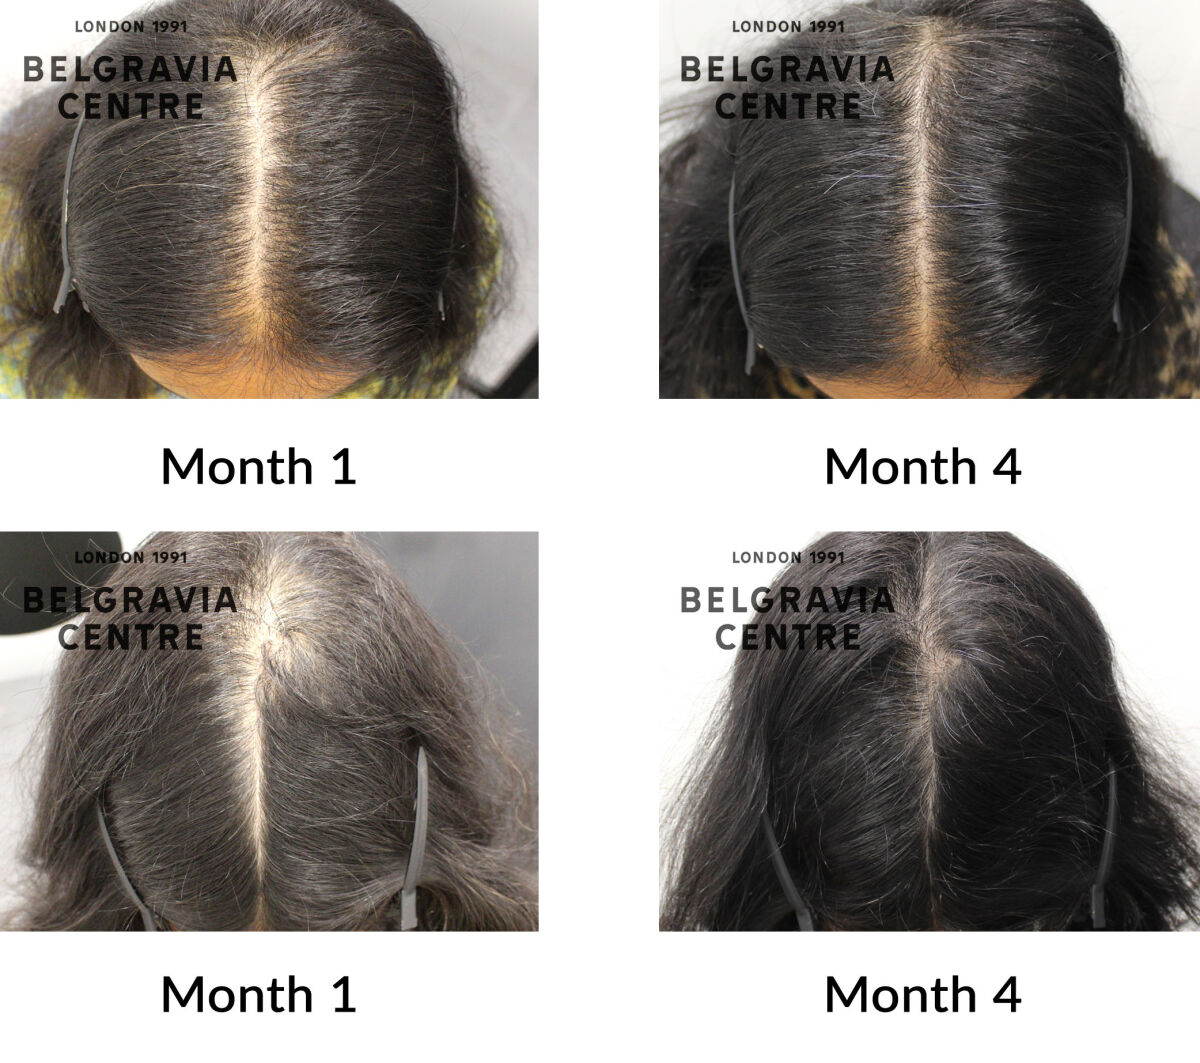 female pattern hair loss the belgravia centre 442504